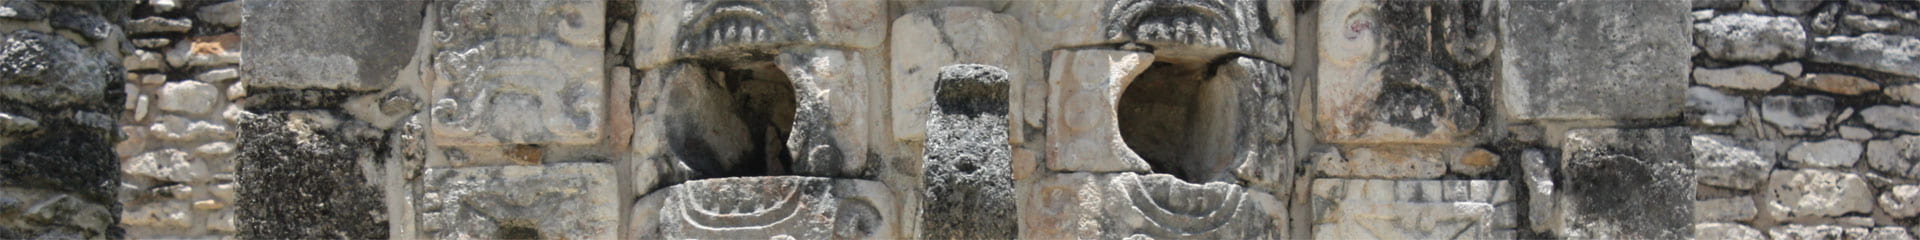 Sculpture of the god Chaac